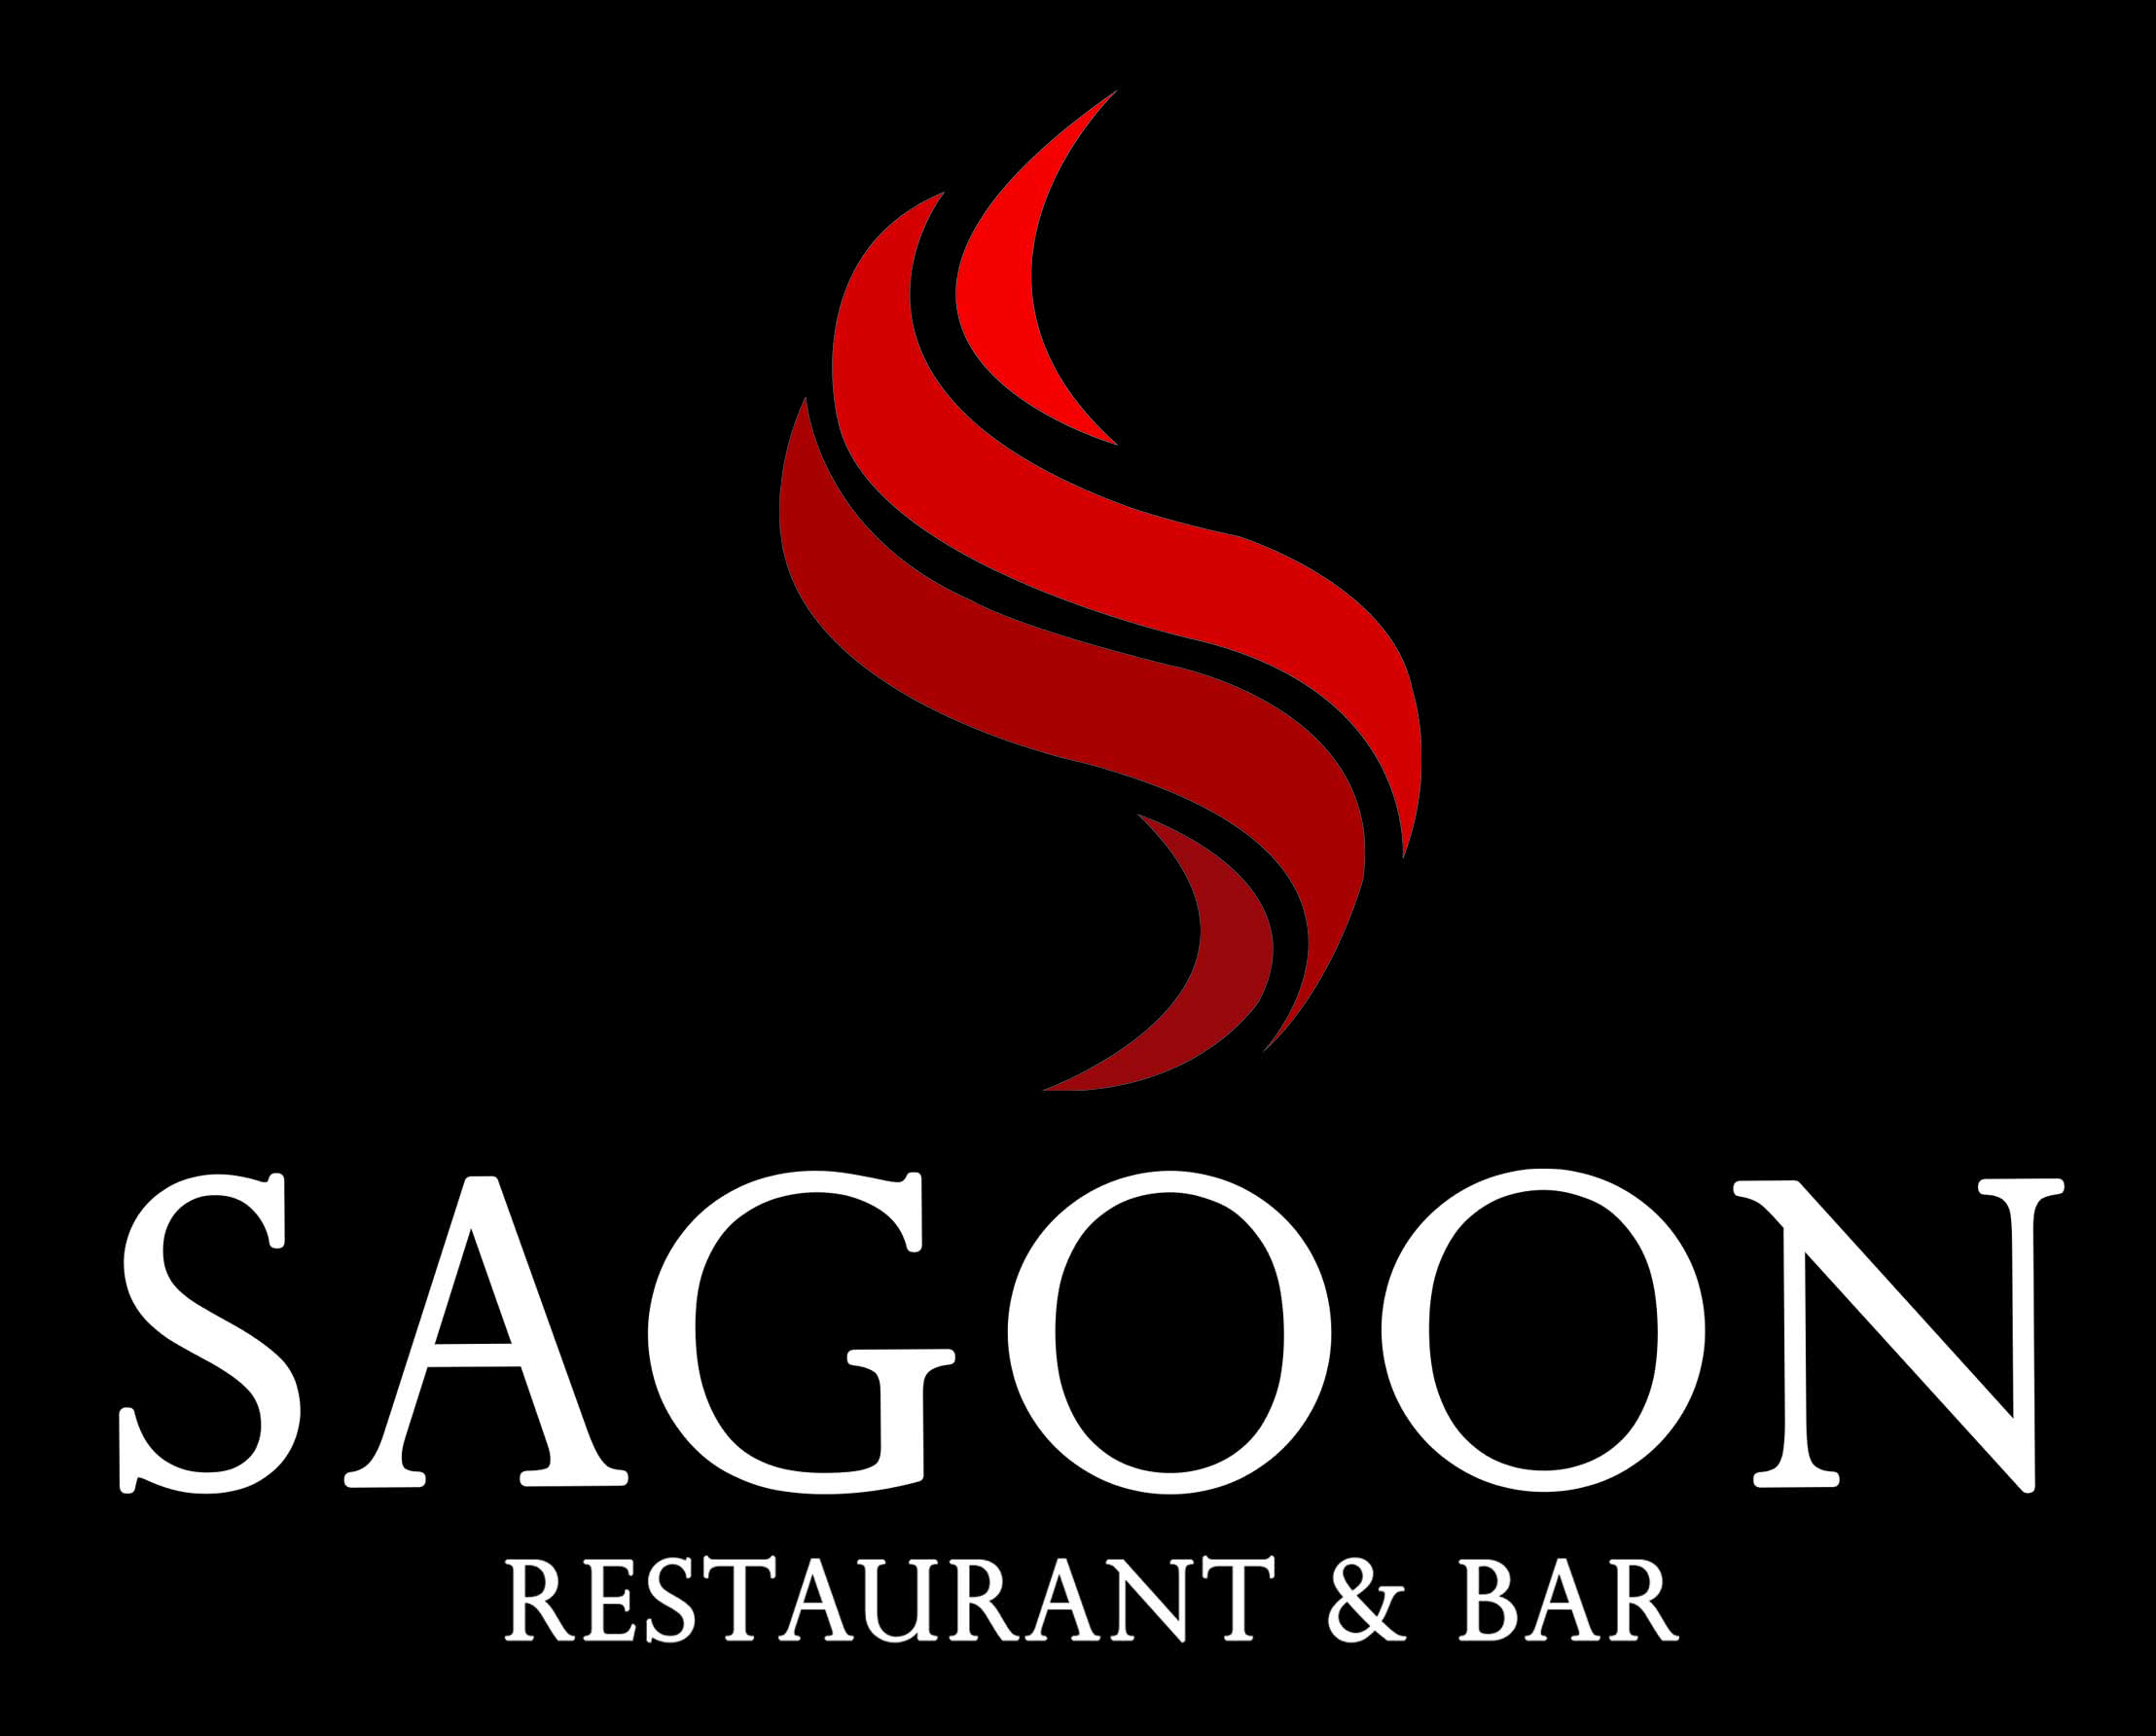 Sagoon Restaurant